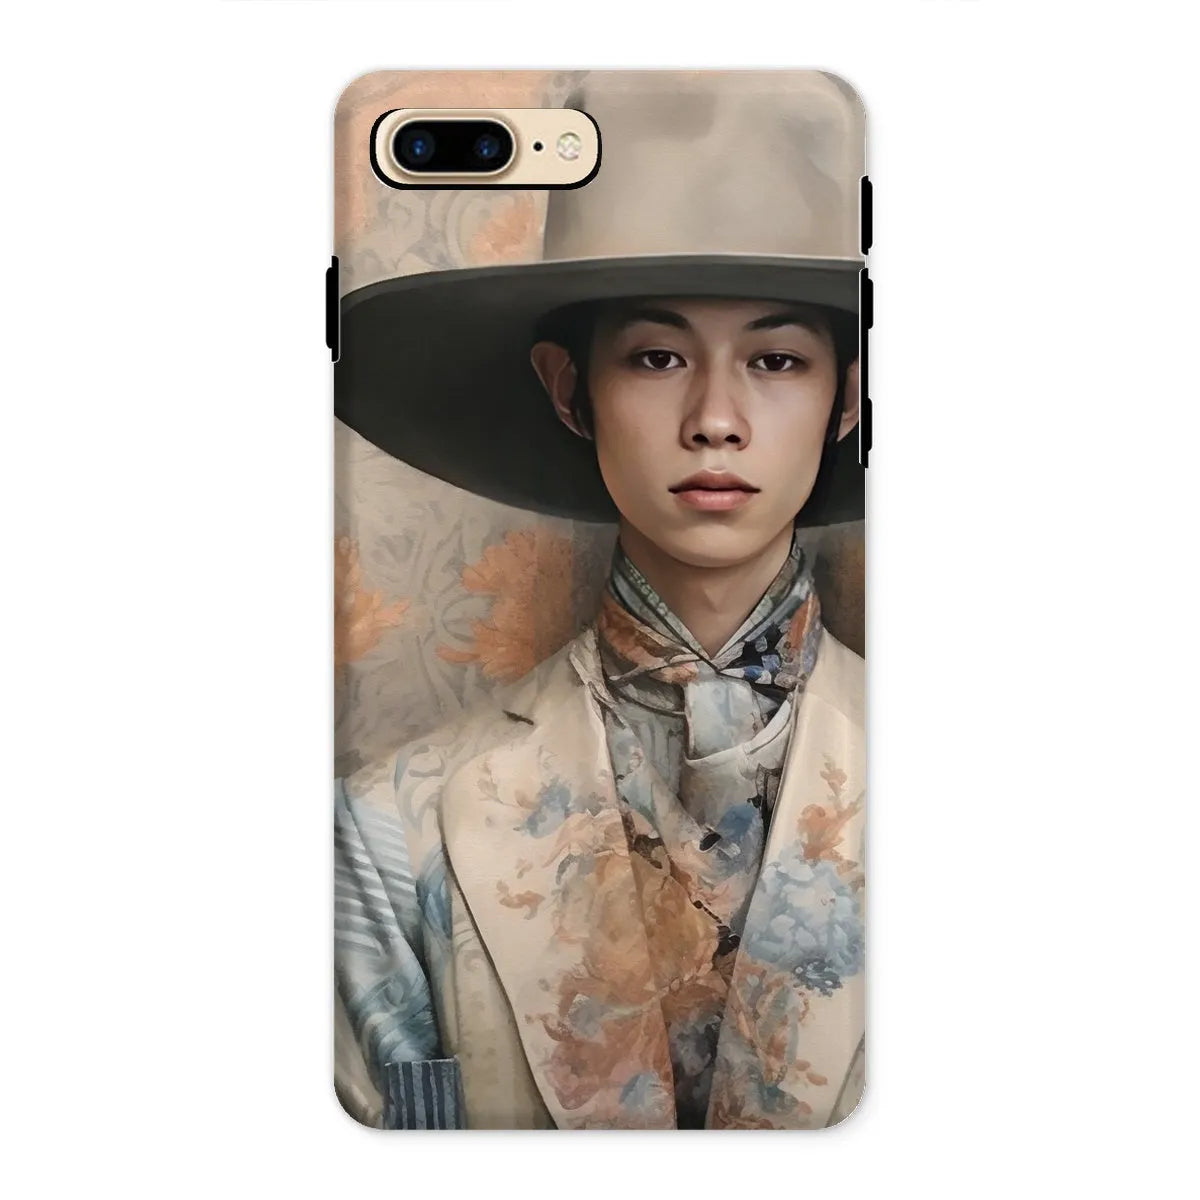 Thuanthong The Transgender Cowboy - Thai F2m Art Phone Case - Iphone 8 Plus / Matte - Mobile Phone Cases - Aesthetic Art